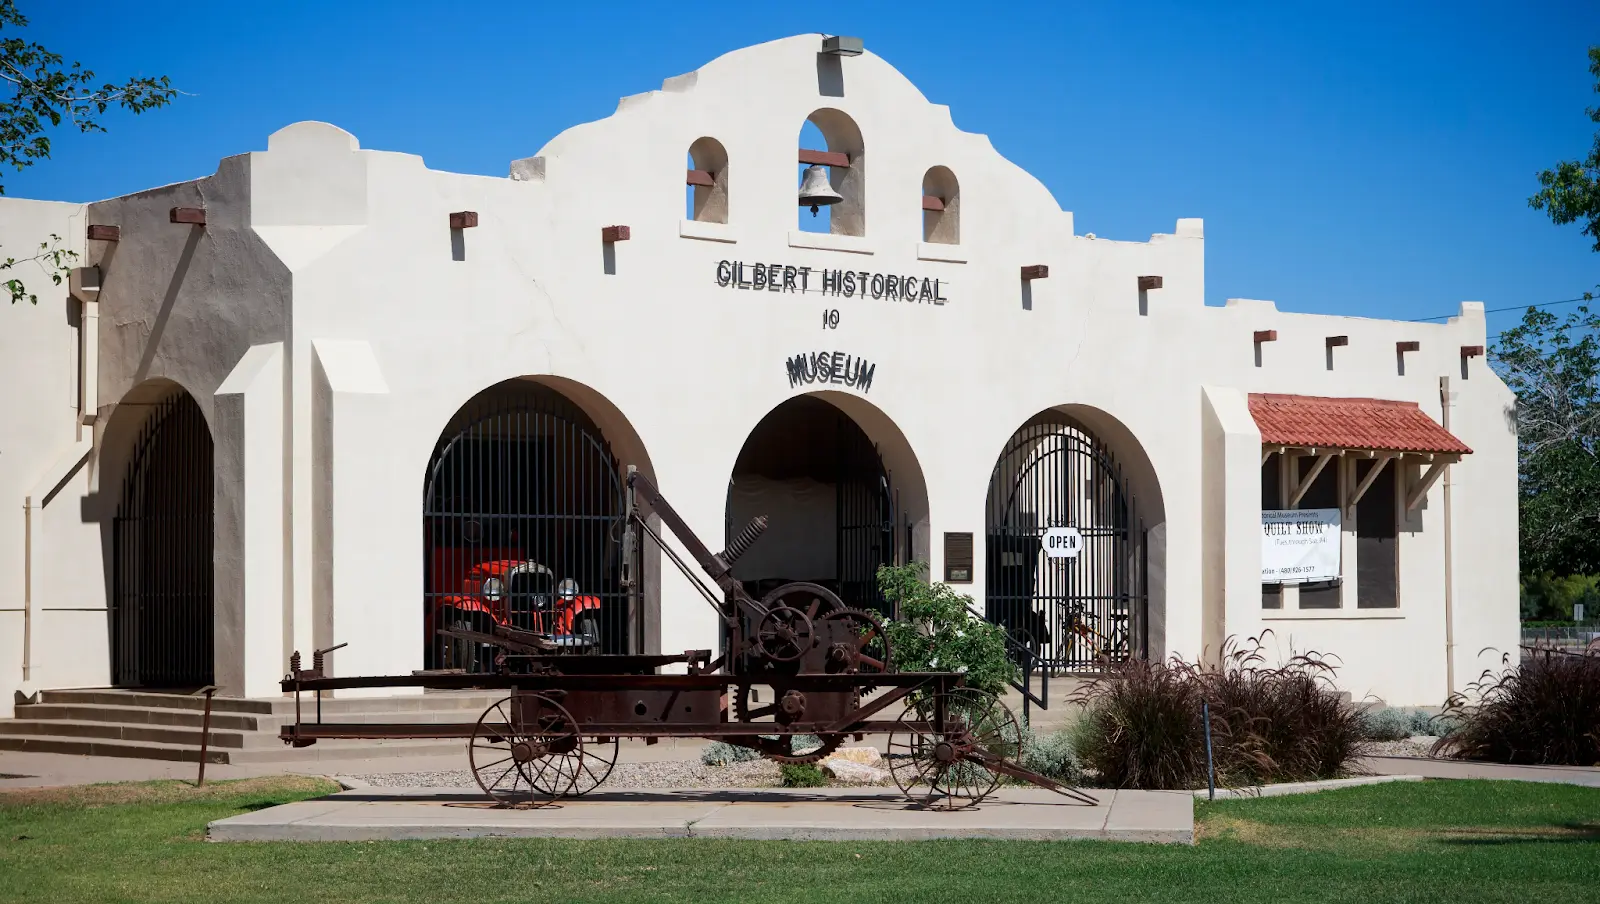 Gilbert Historical Museum